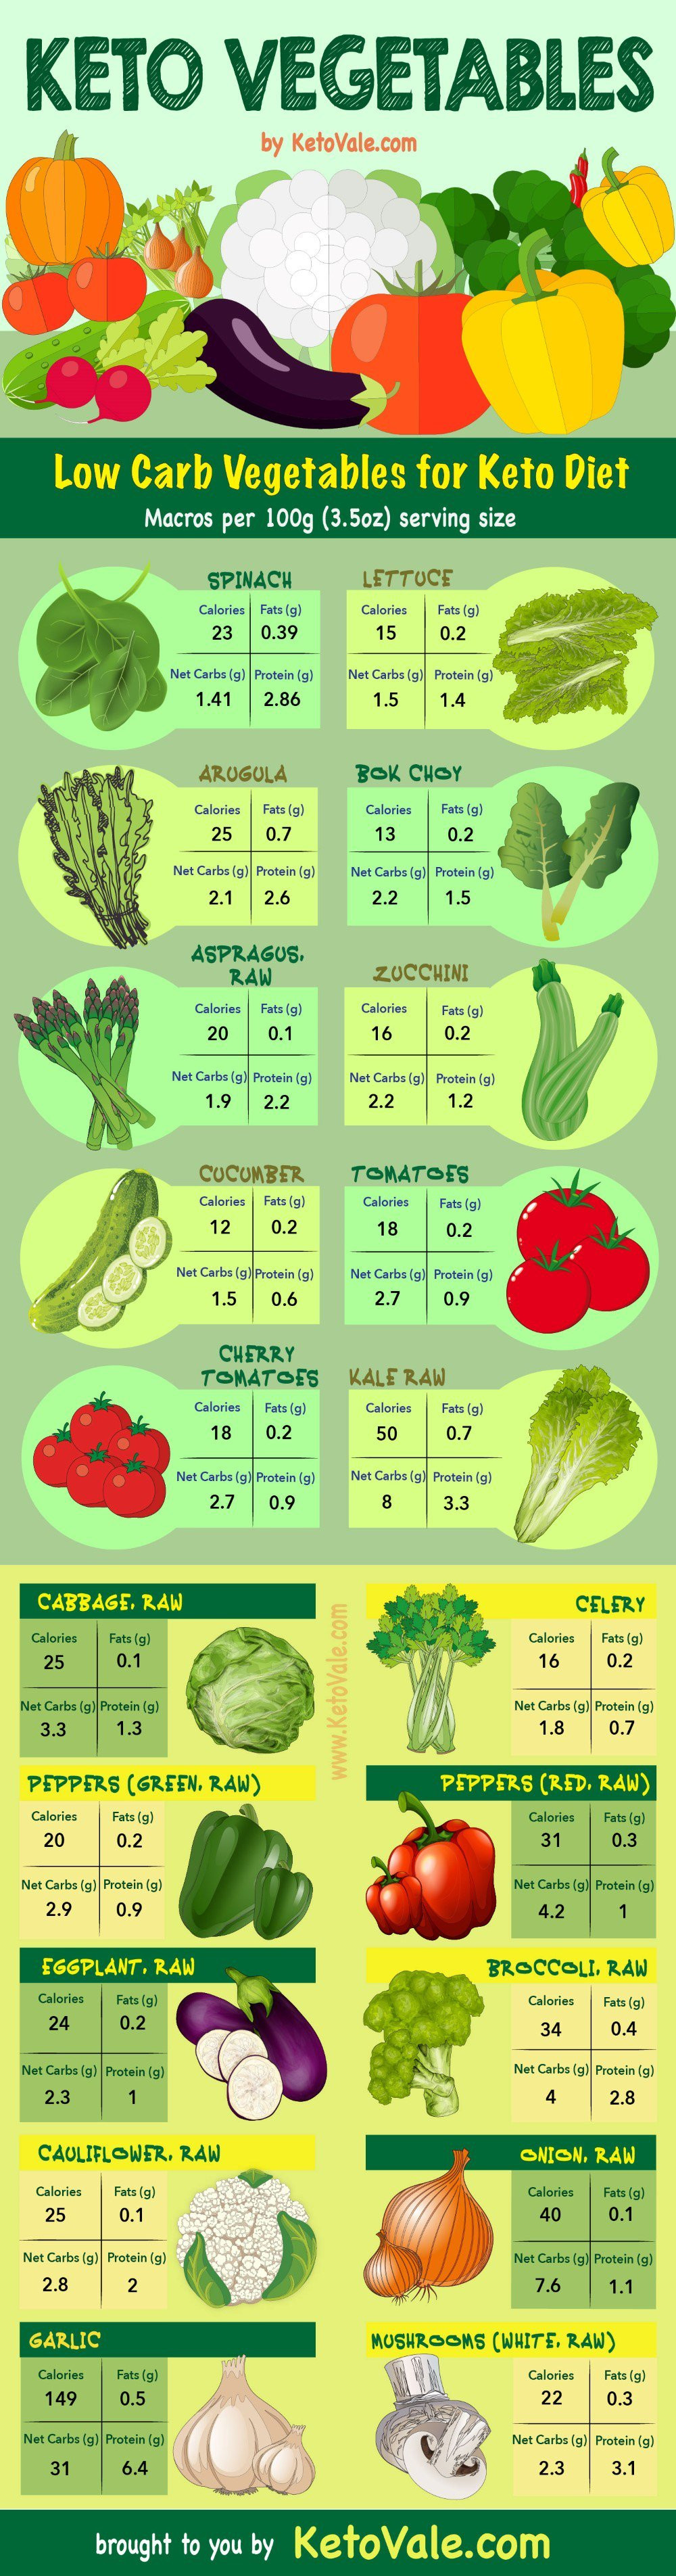 Keto Diet Vegetables List
 Keto Diet Food List Low Carb Grocery Shopping Guide PDF